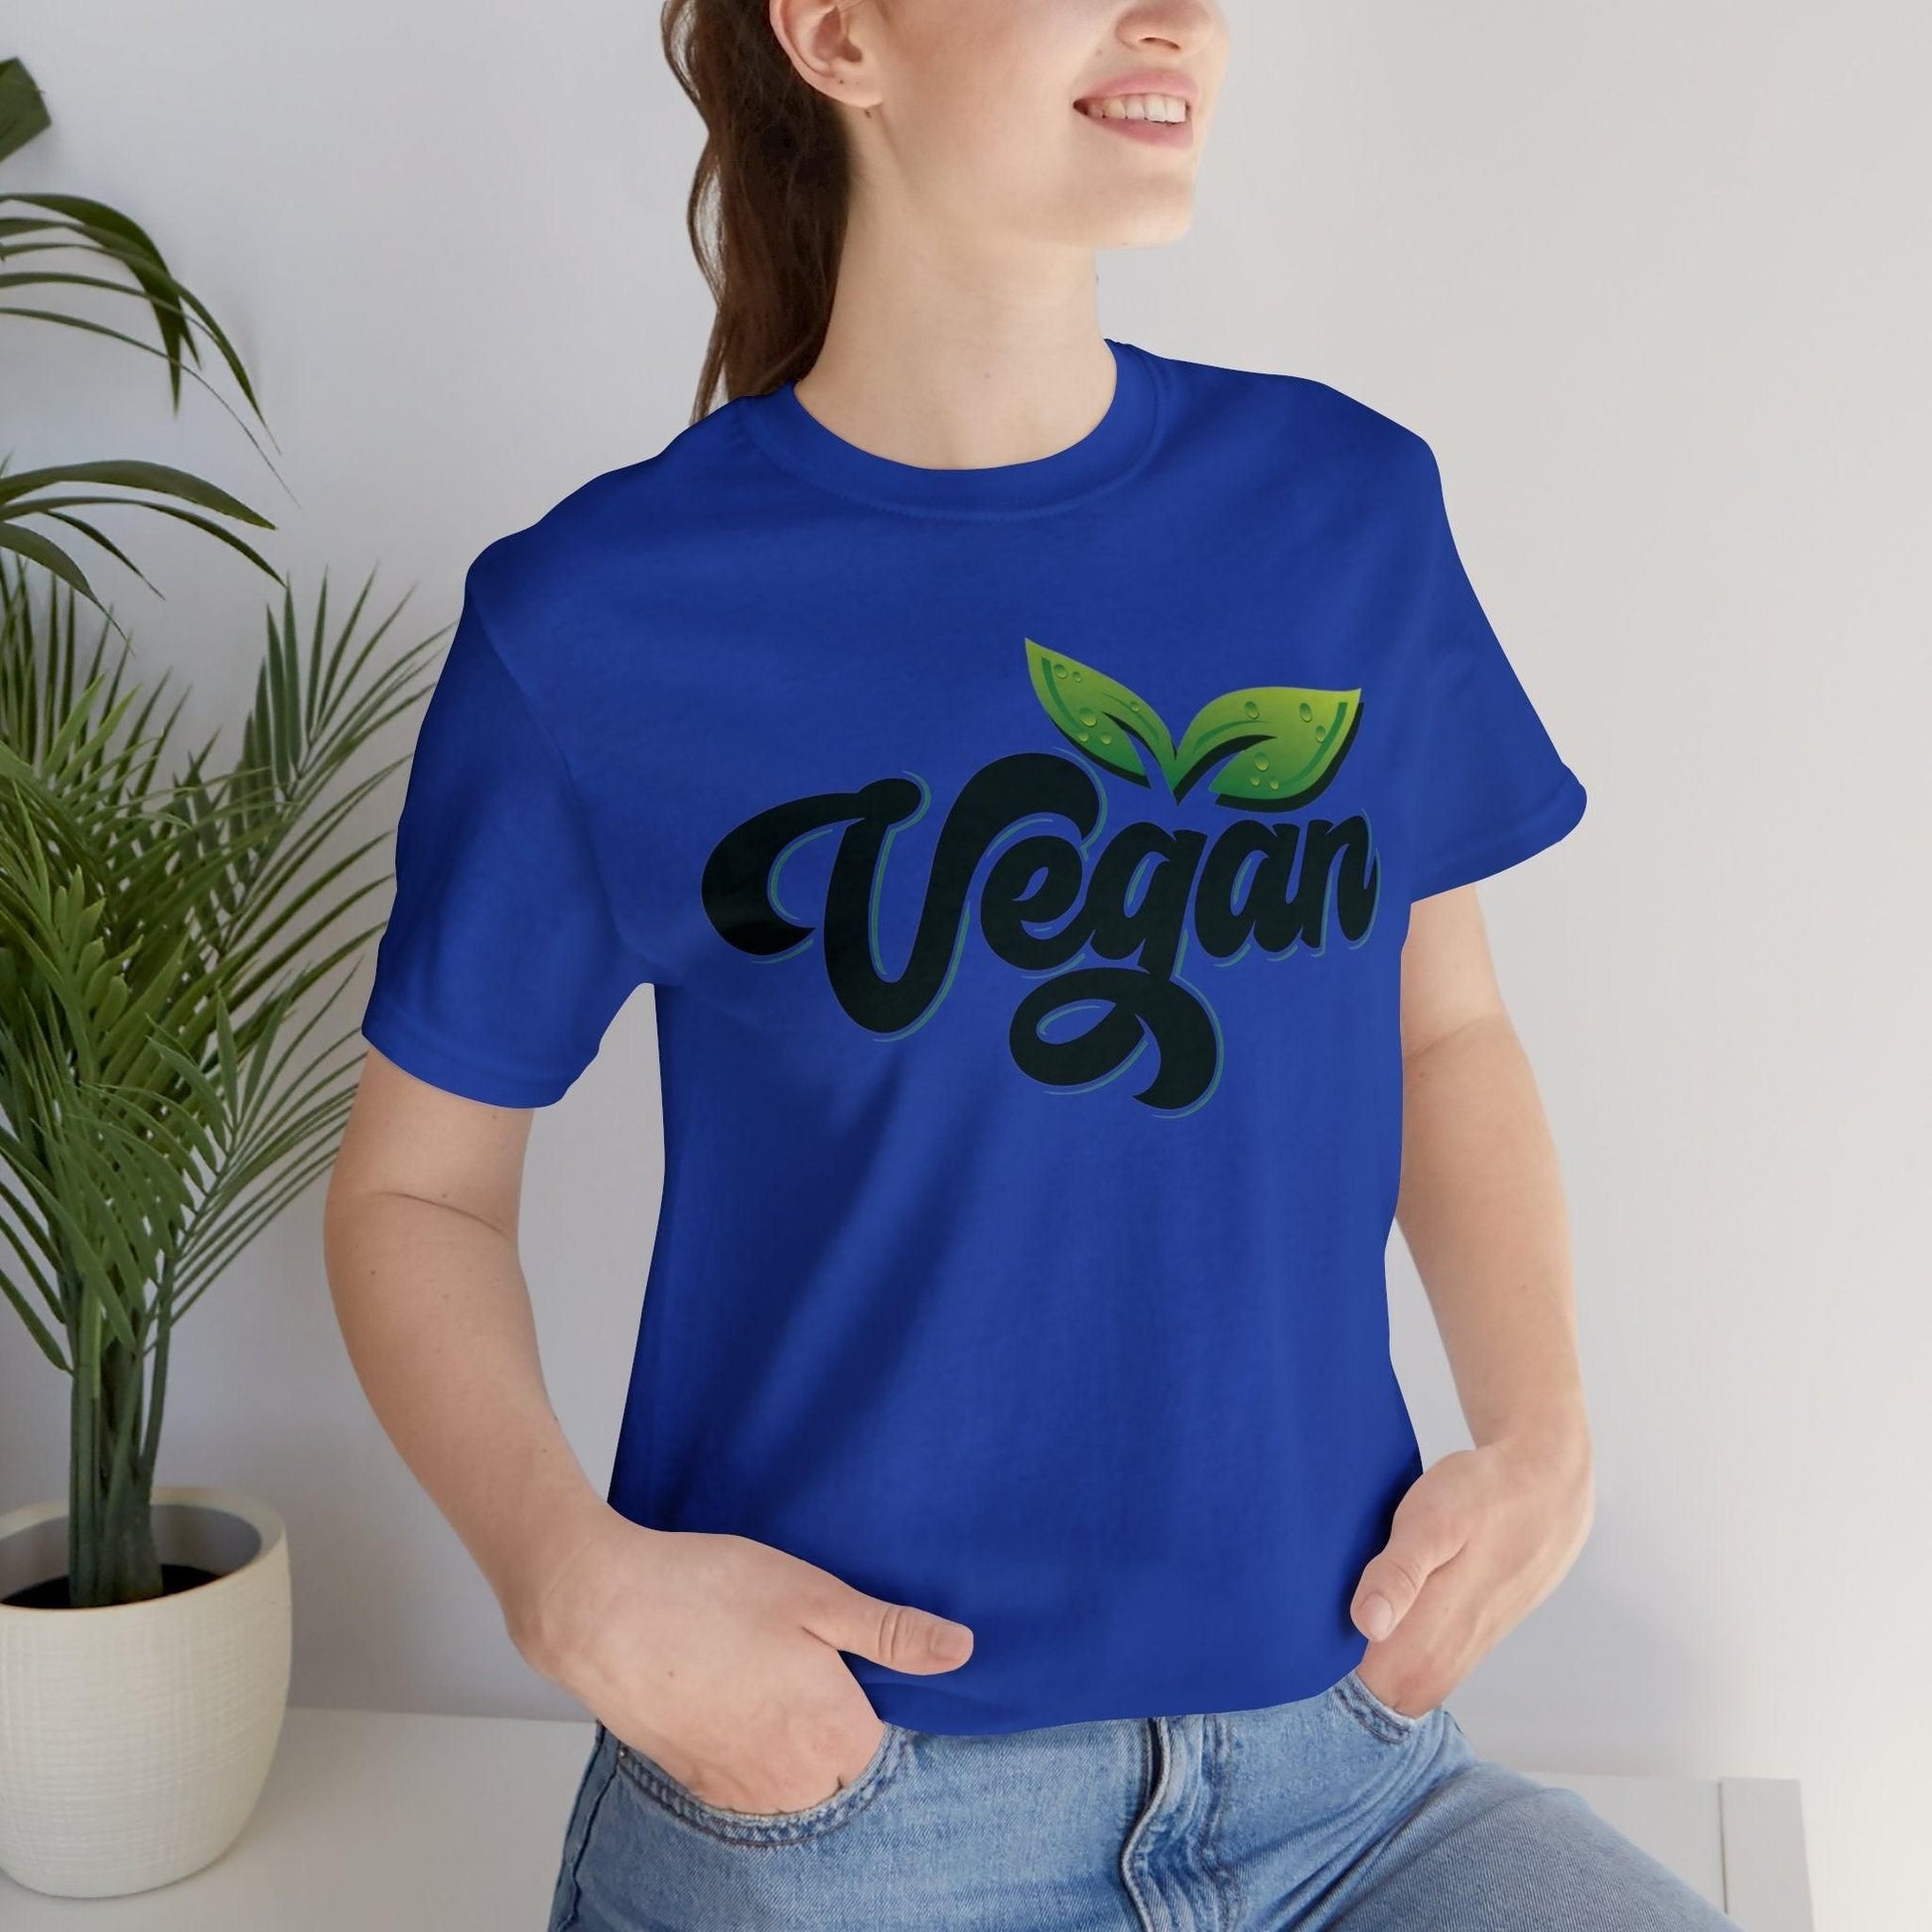 Vegan Unisex  Short Sleeve Tee T-Shirt True Royal S 